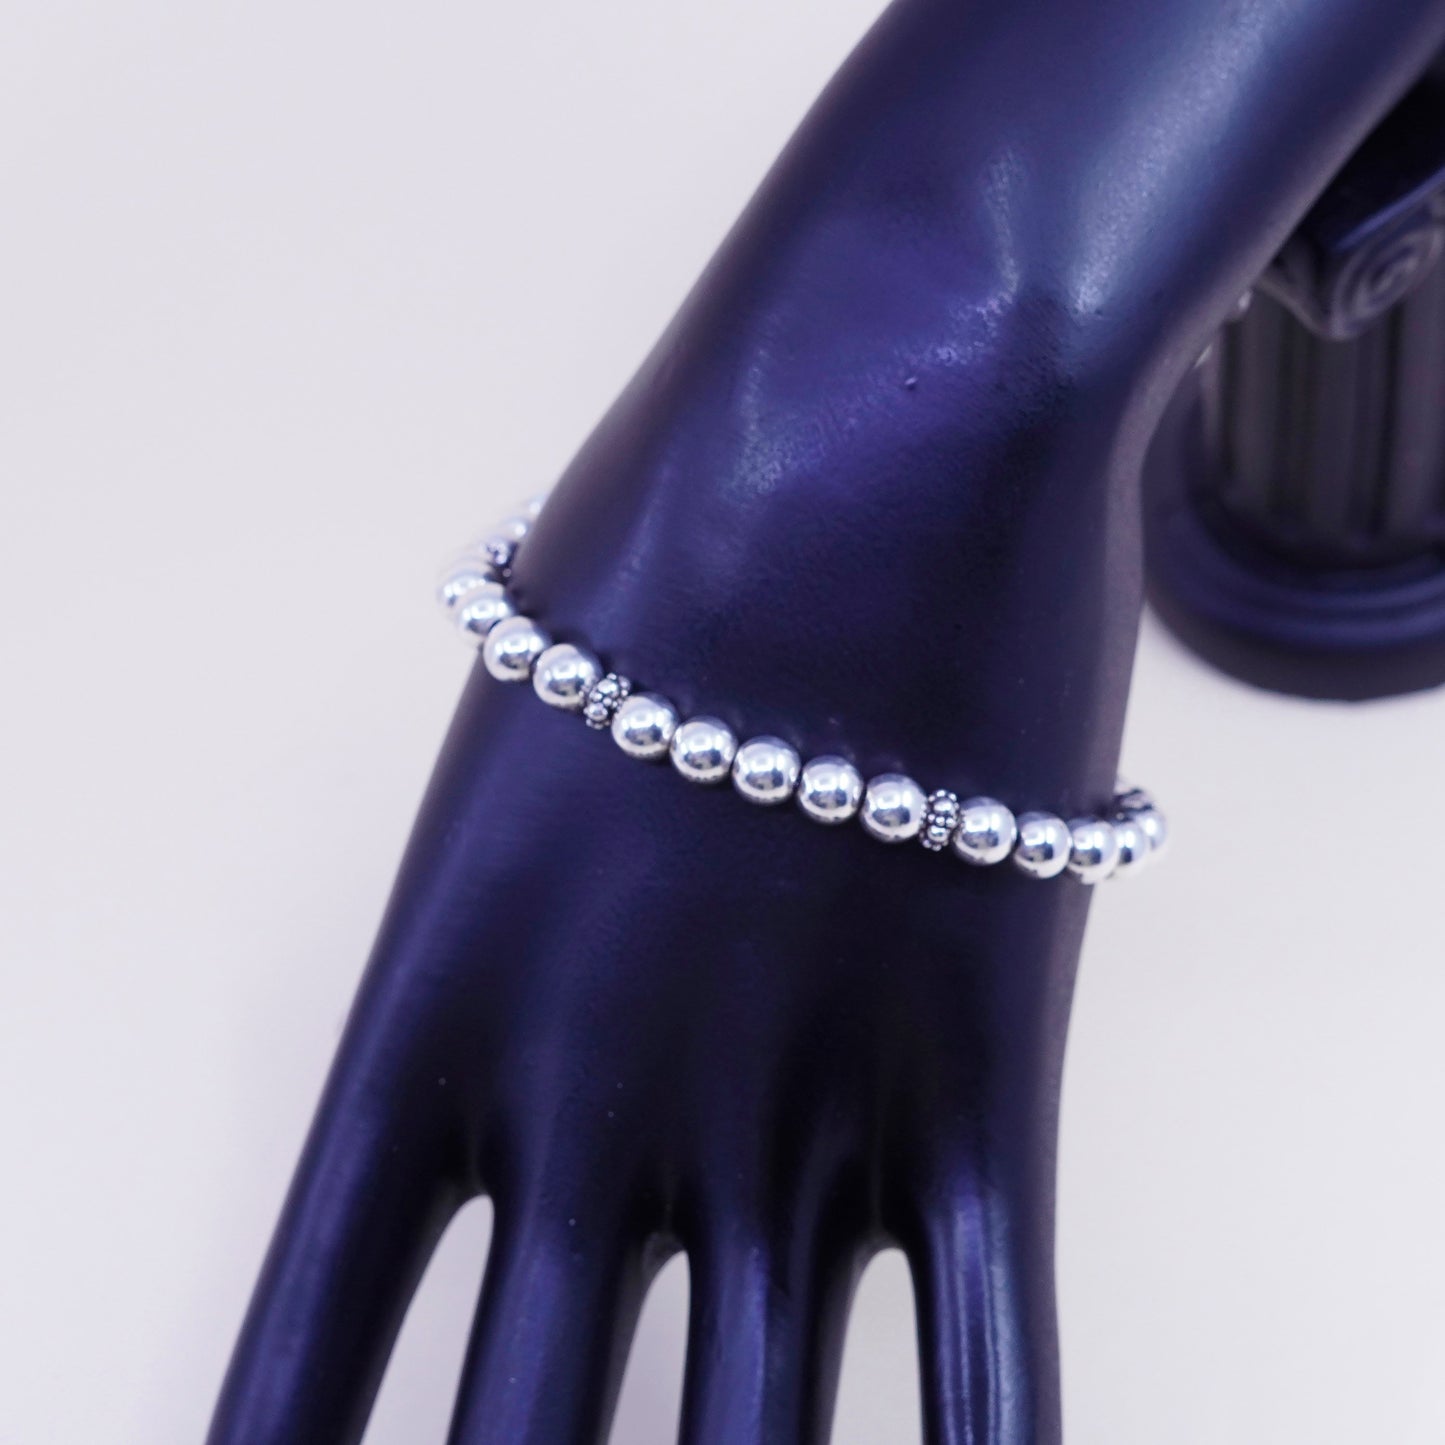 7”, 5mm, Vintage sterling silver bracelet, filigree 925 beads chain, jewelry